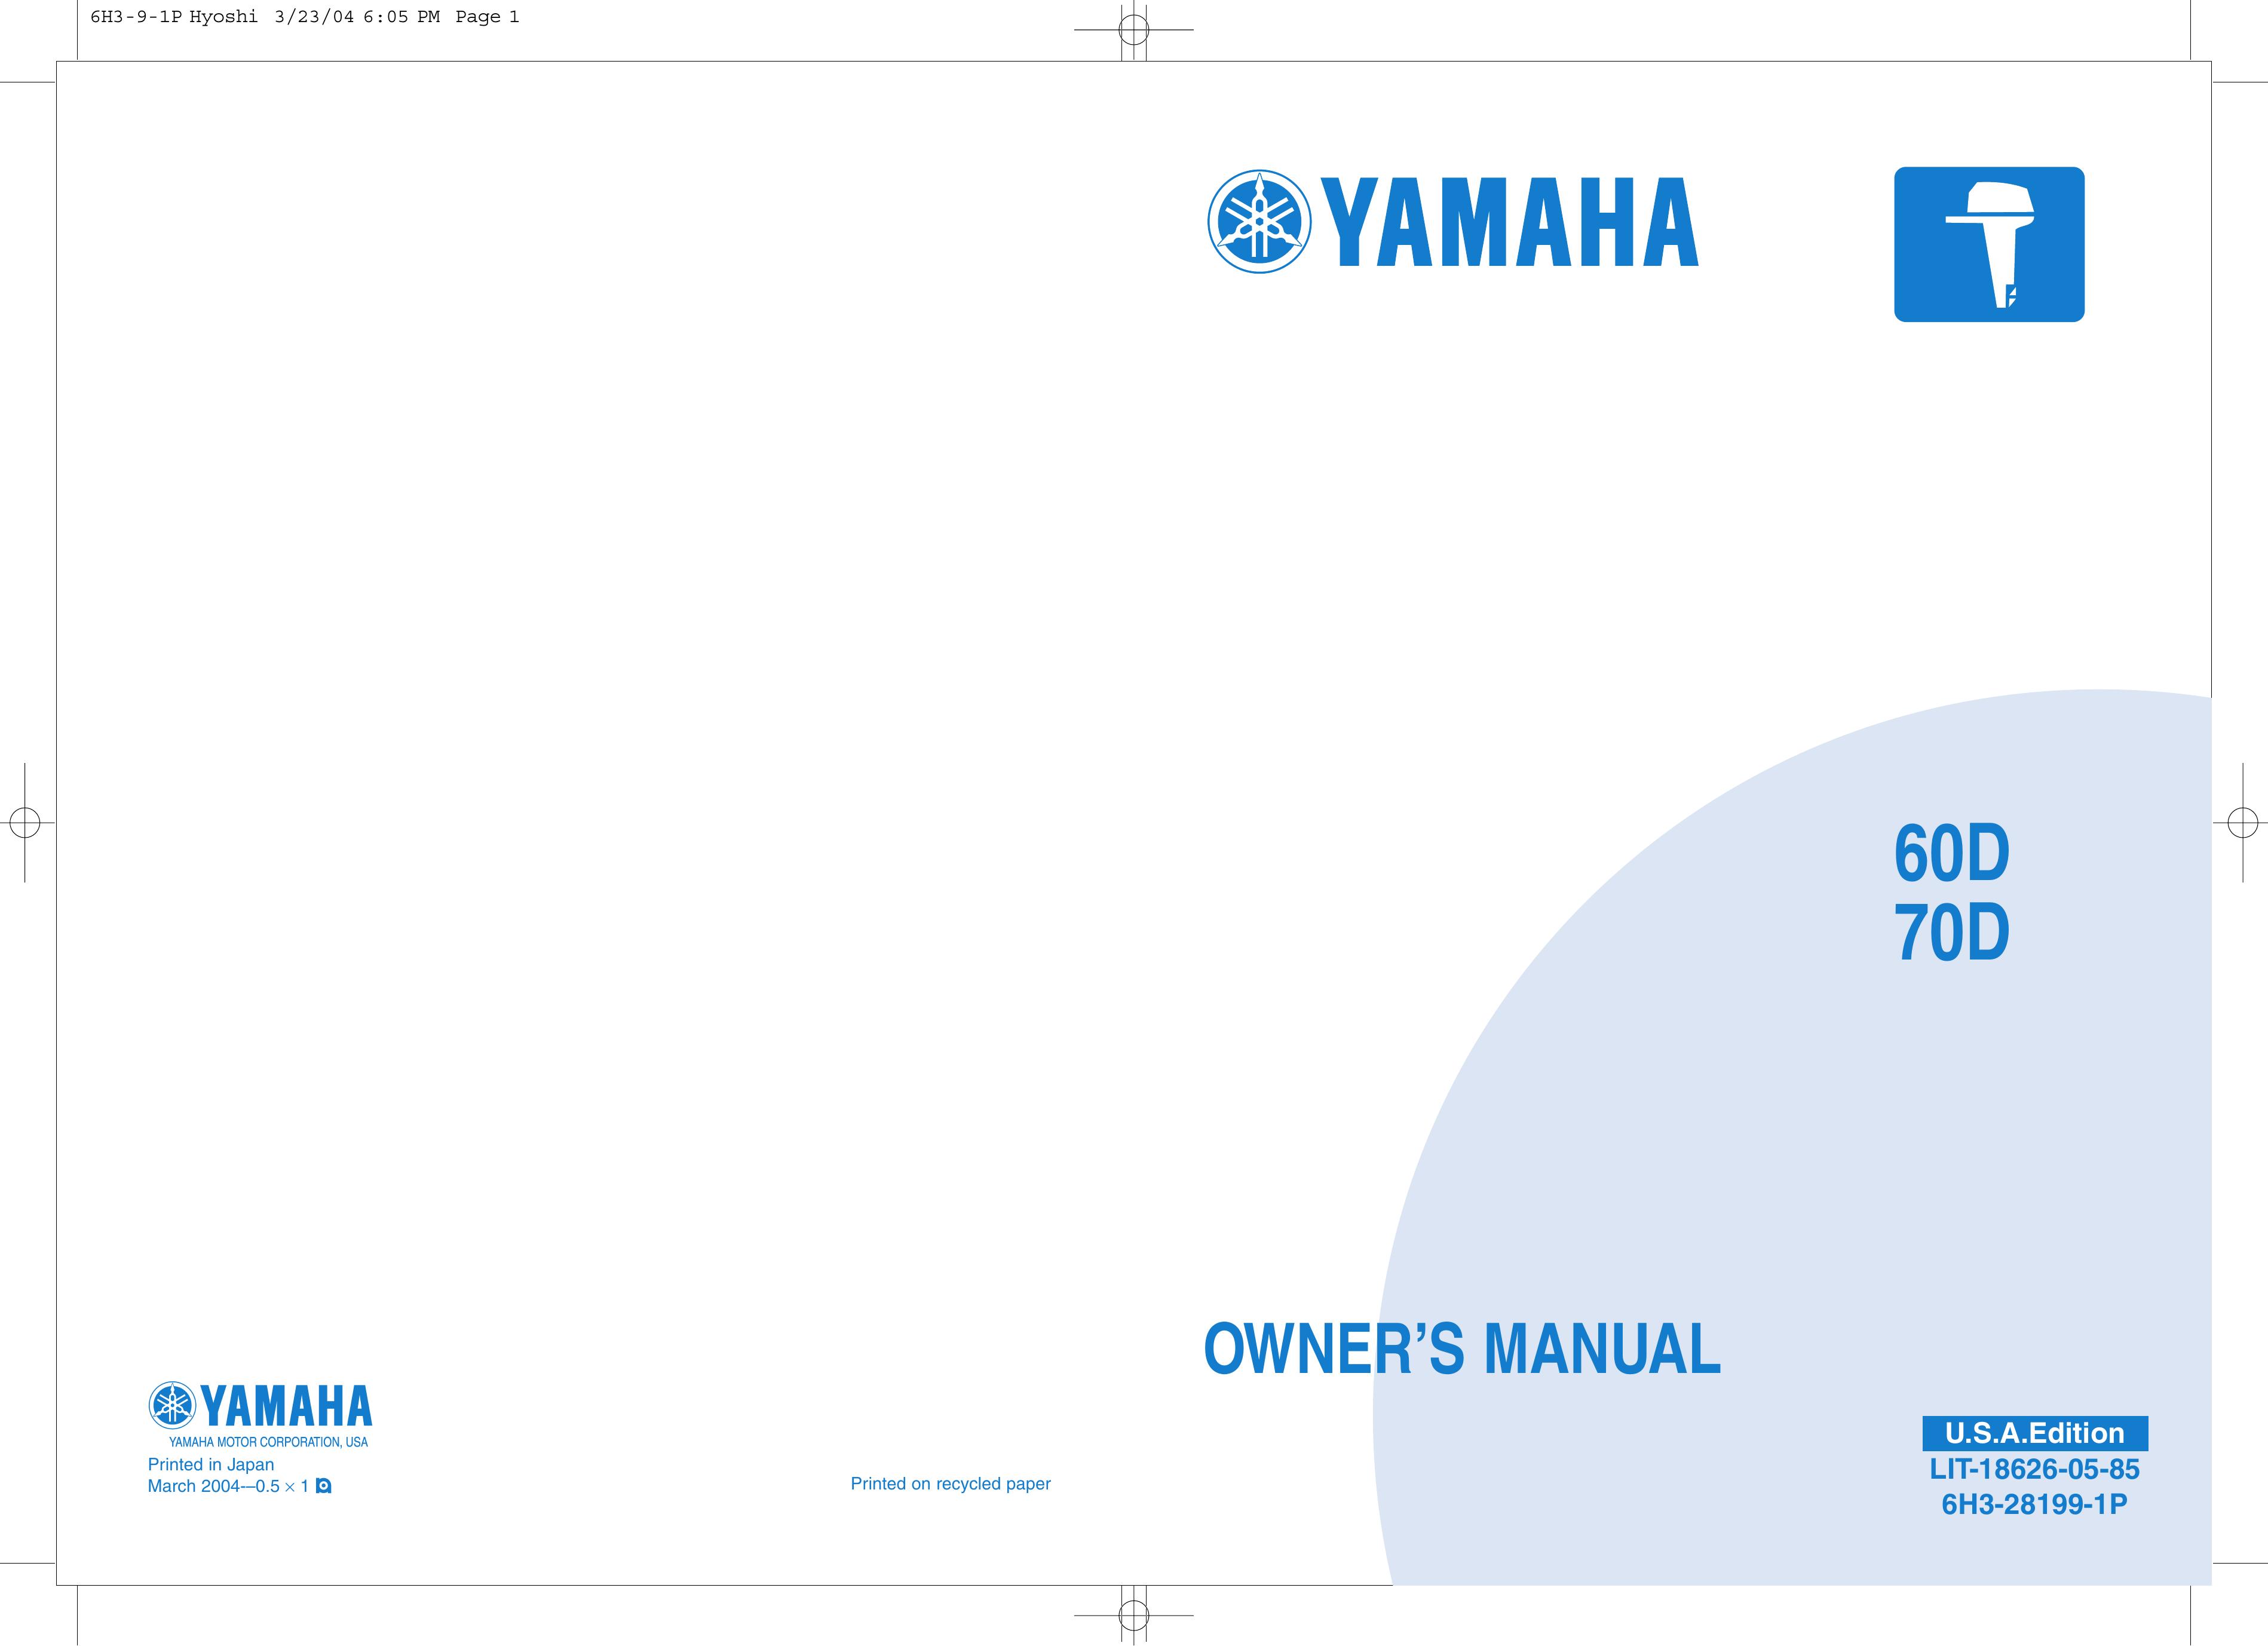 Yamaha 60D Boat User Manual